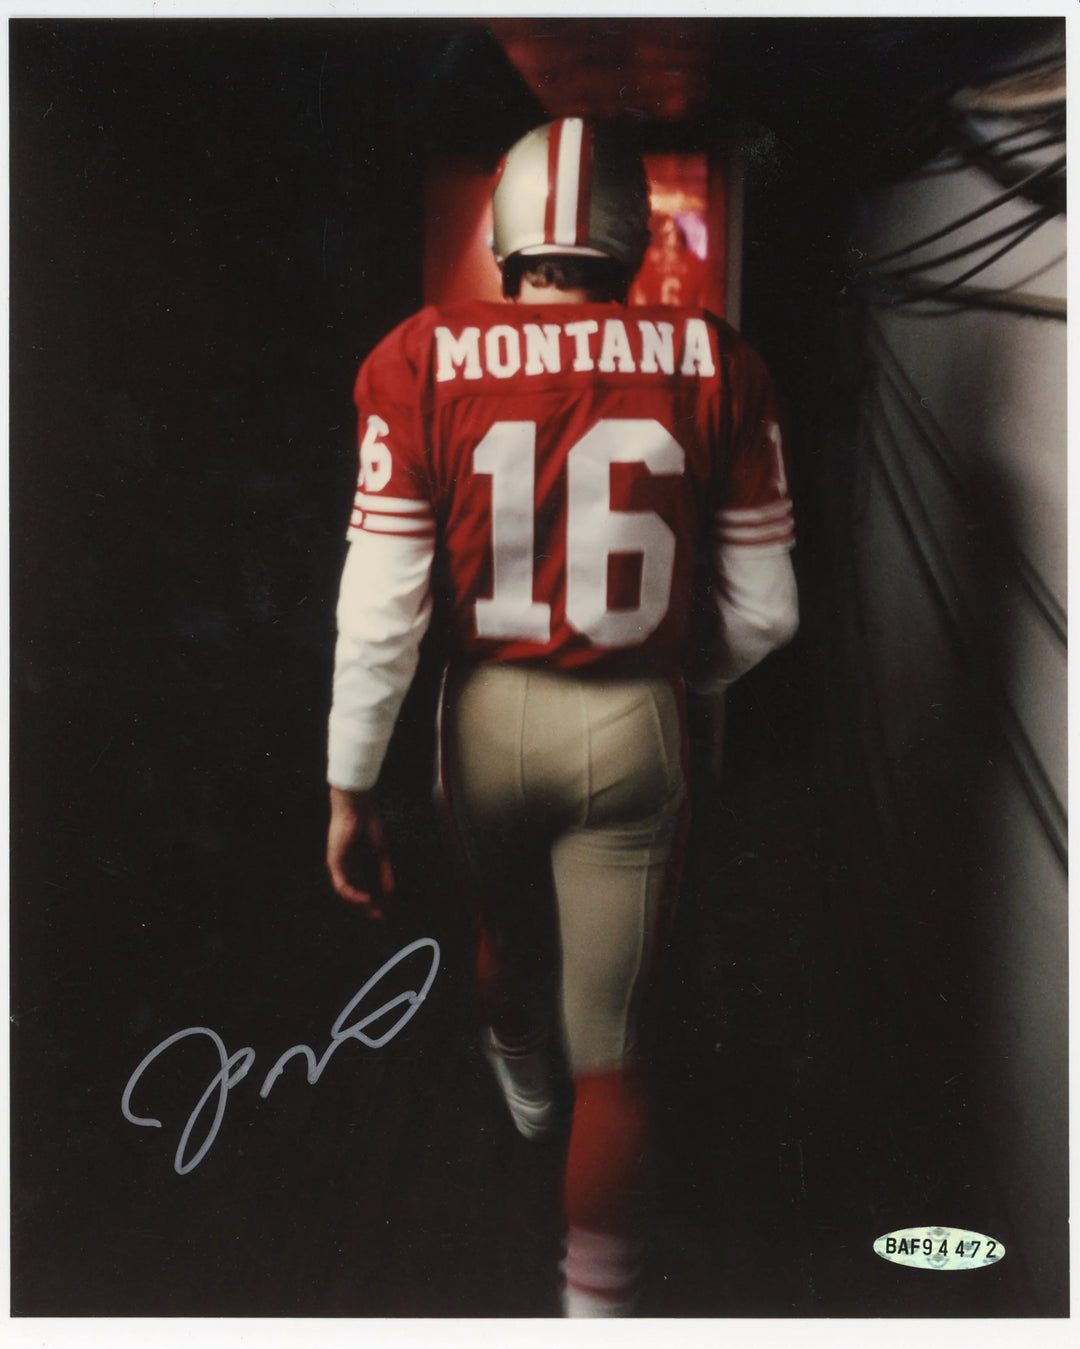 Joe Montana Autographed 8x10 Photo (Upper Deck) Image 1